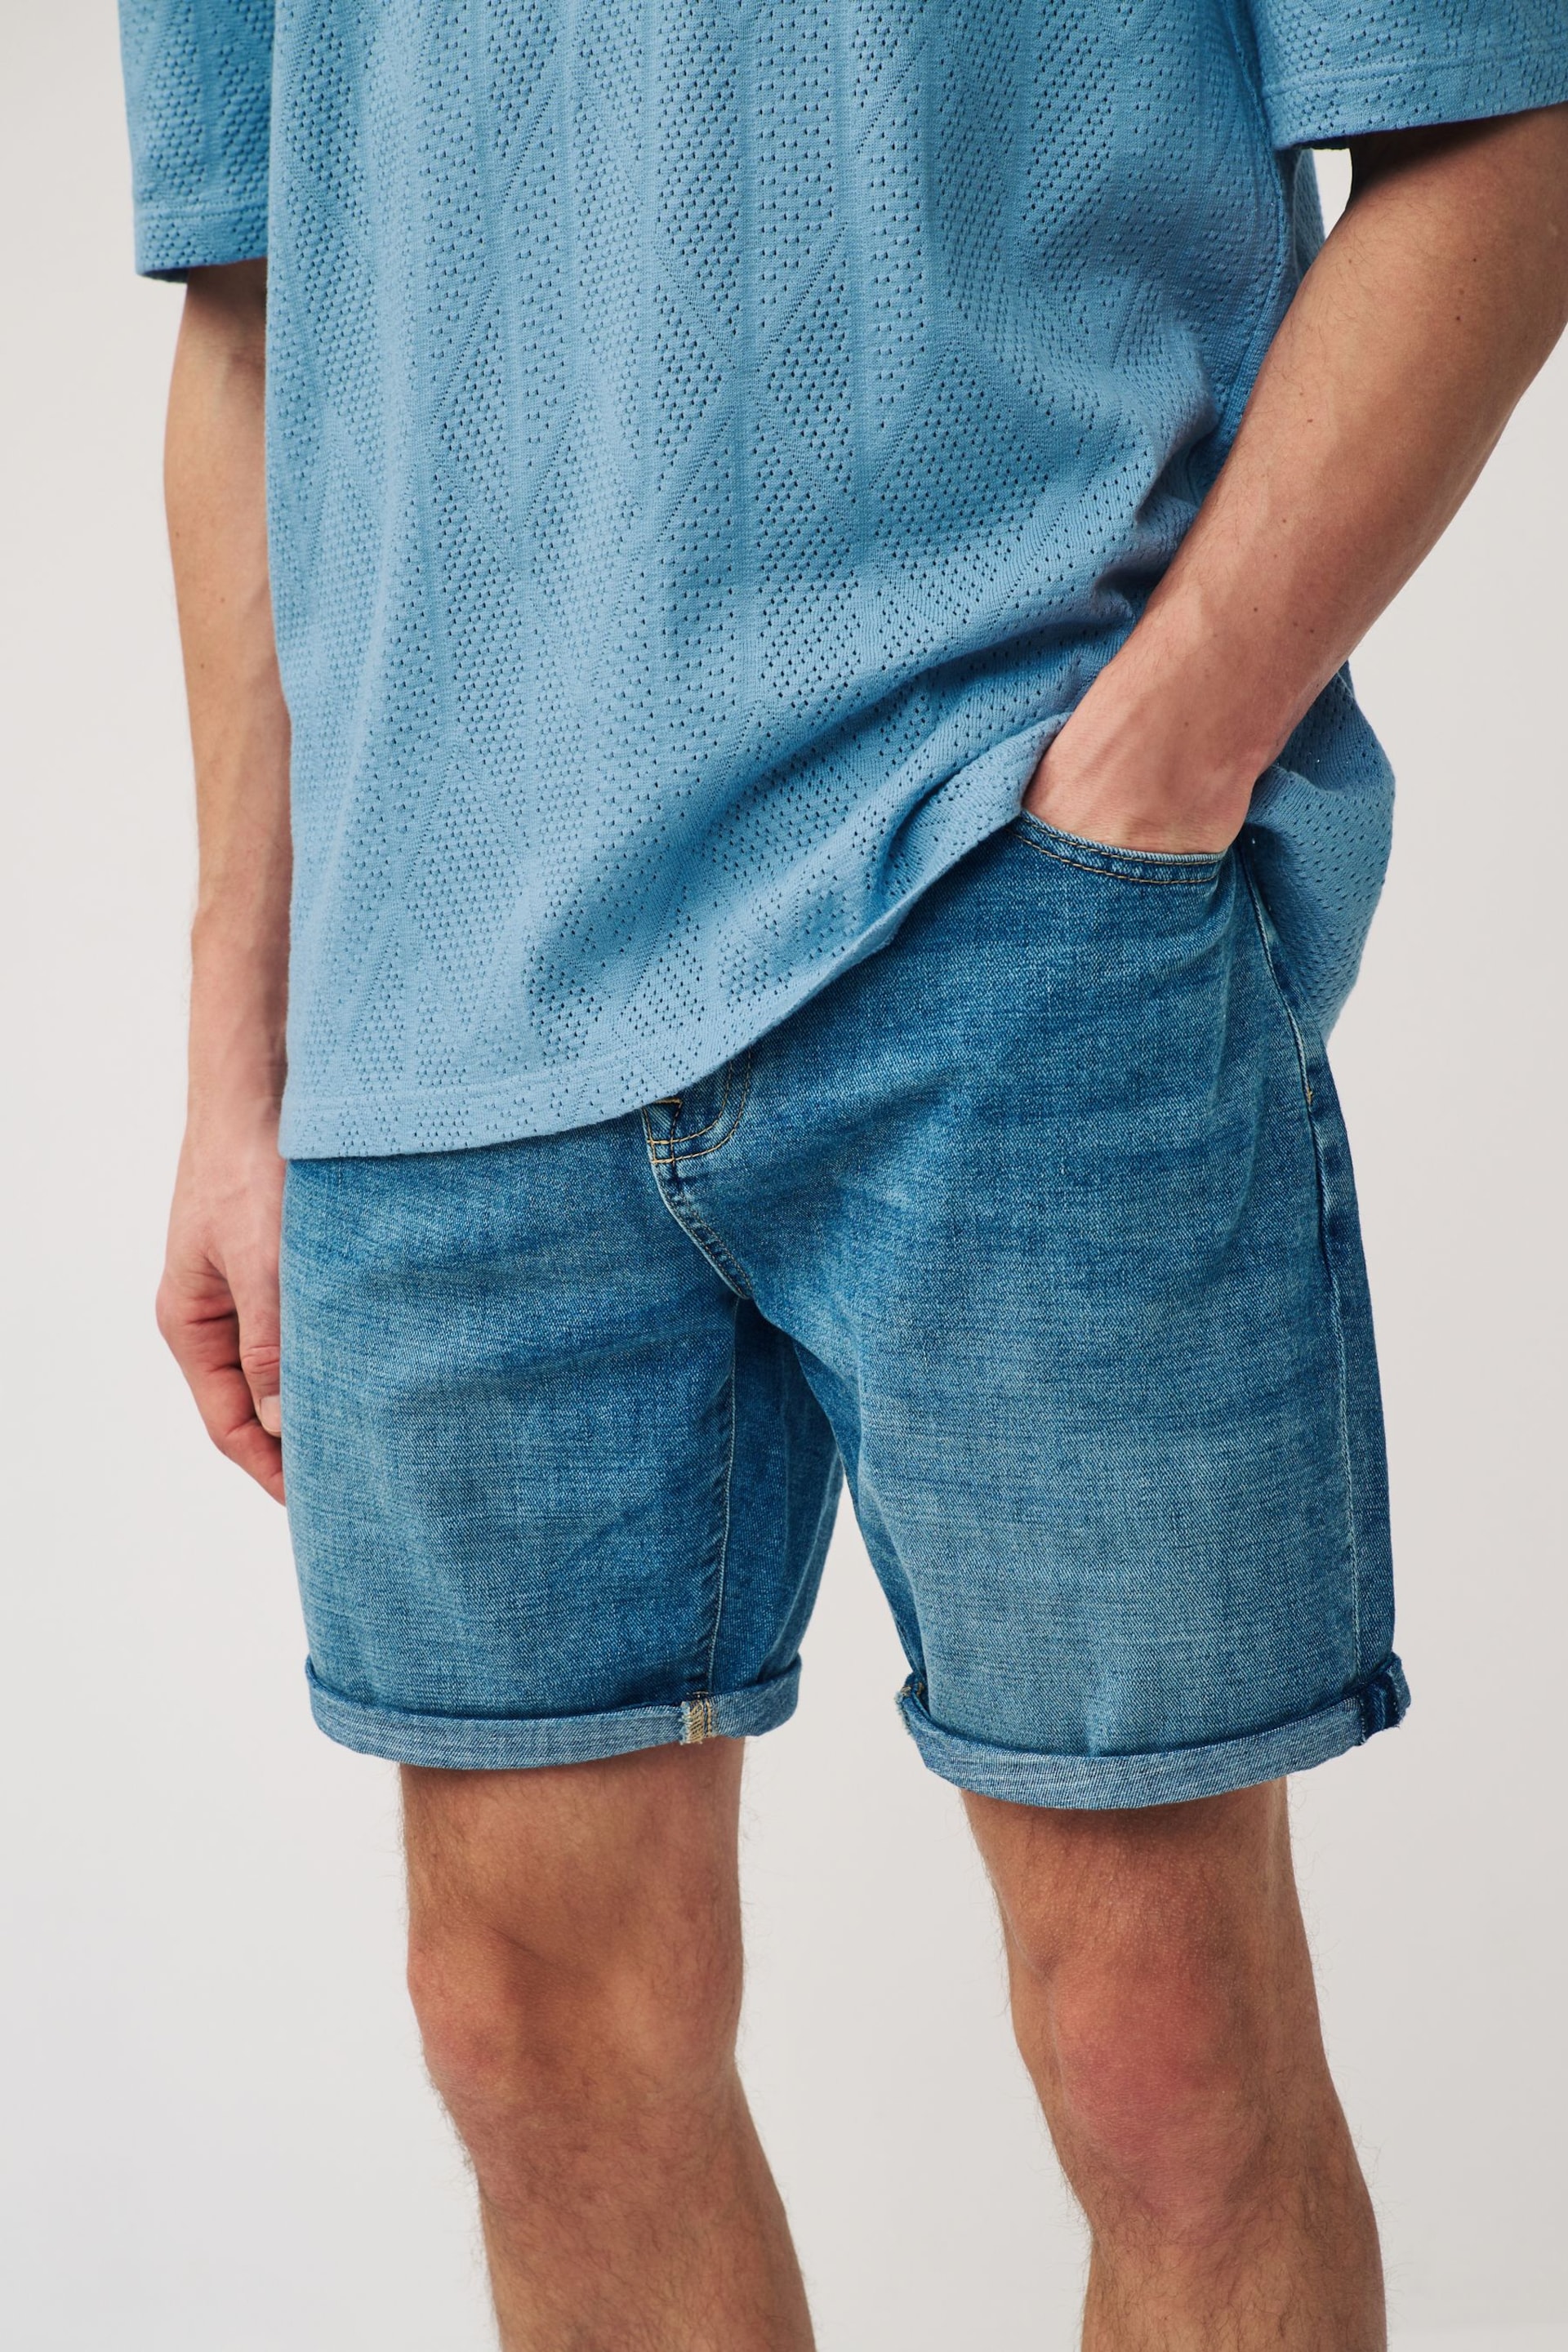 Mid Blue Summer Weight Denim Shorts - Image 1 of 8